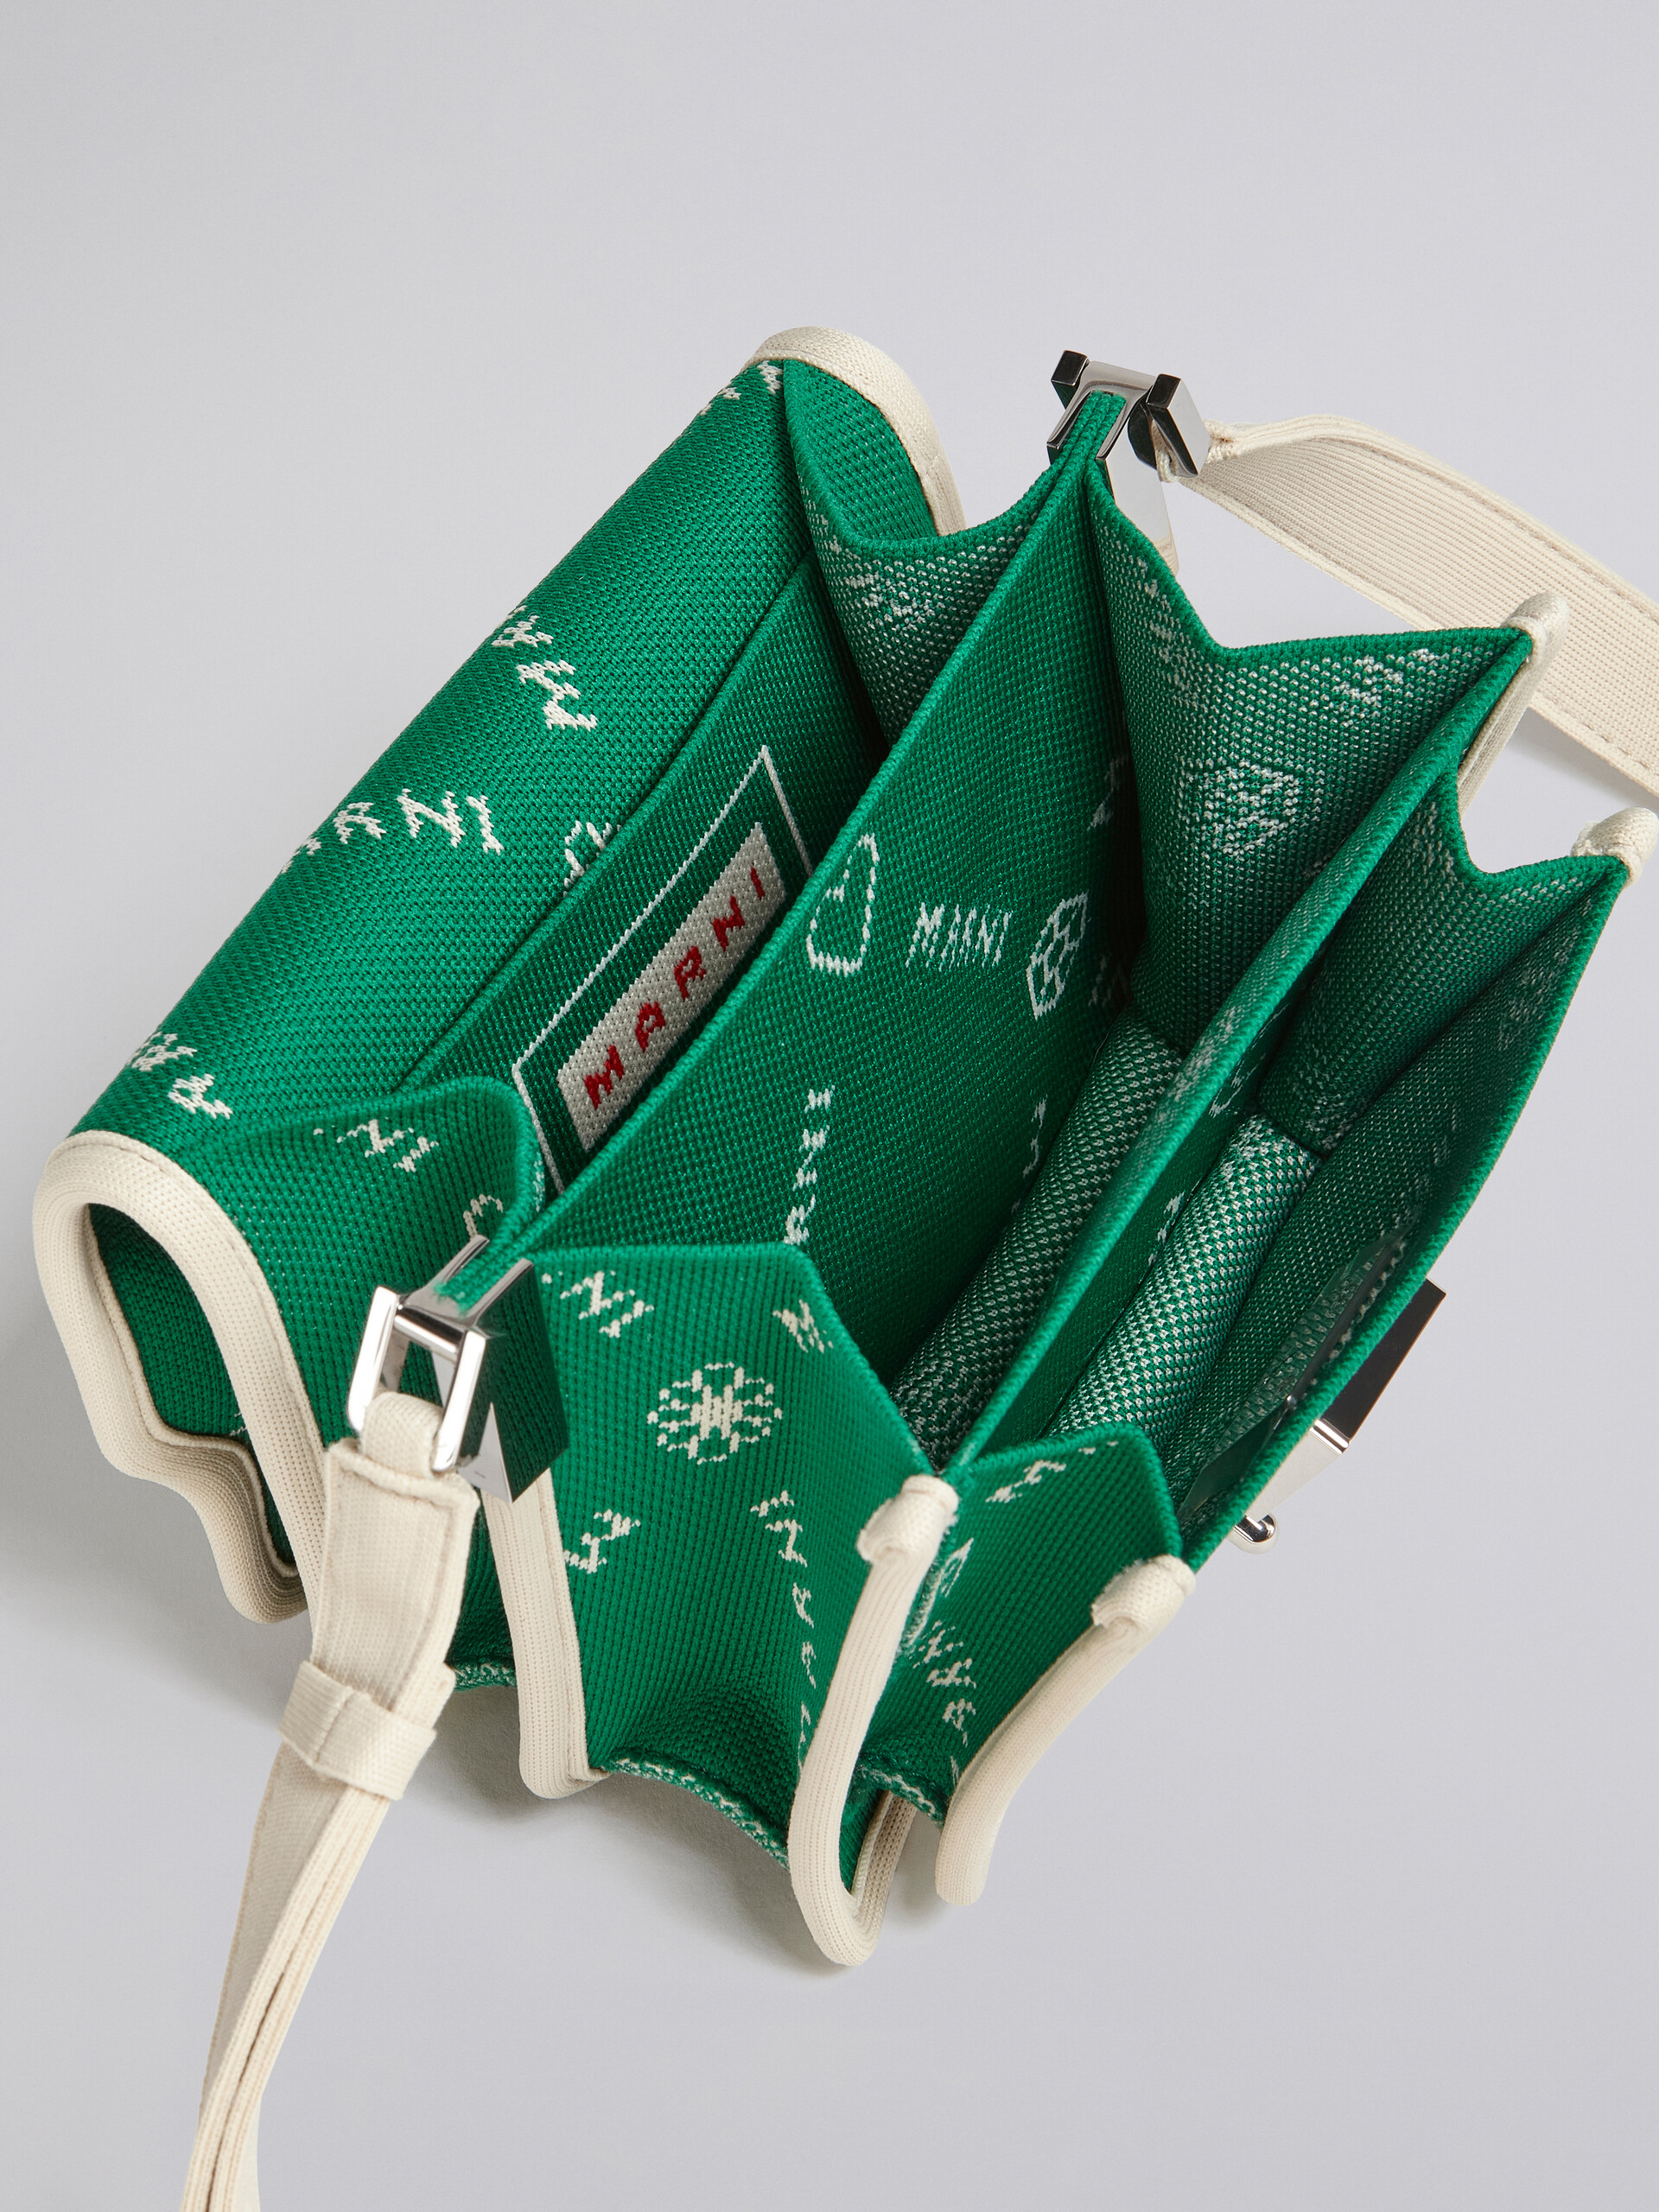 TRUNK SOFT mini bag in green Marnigram jacquard - Shoulder Bag - Image 4